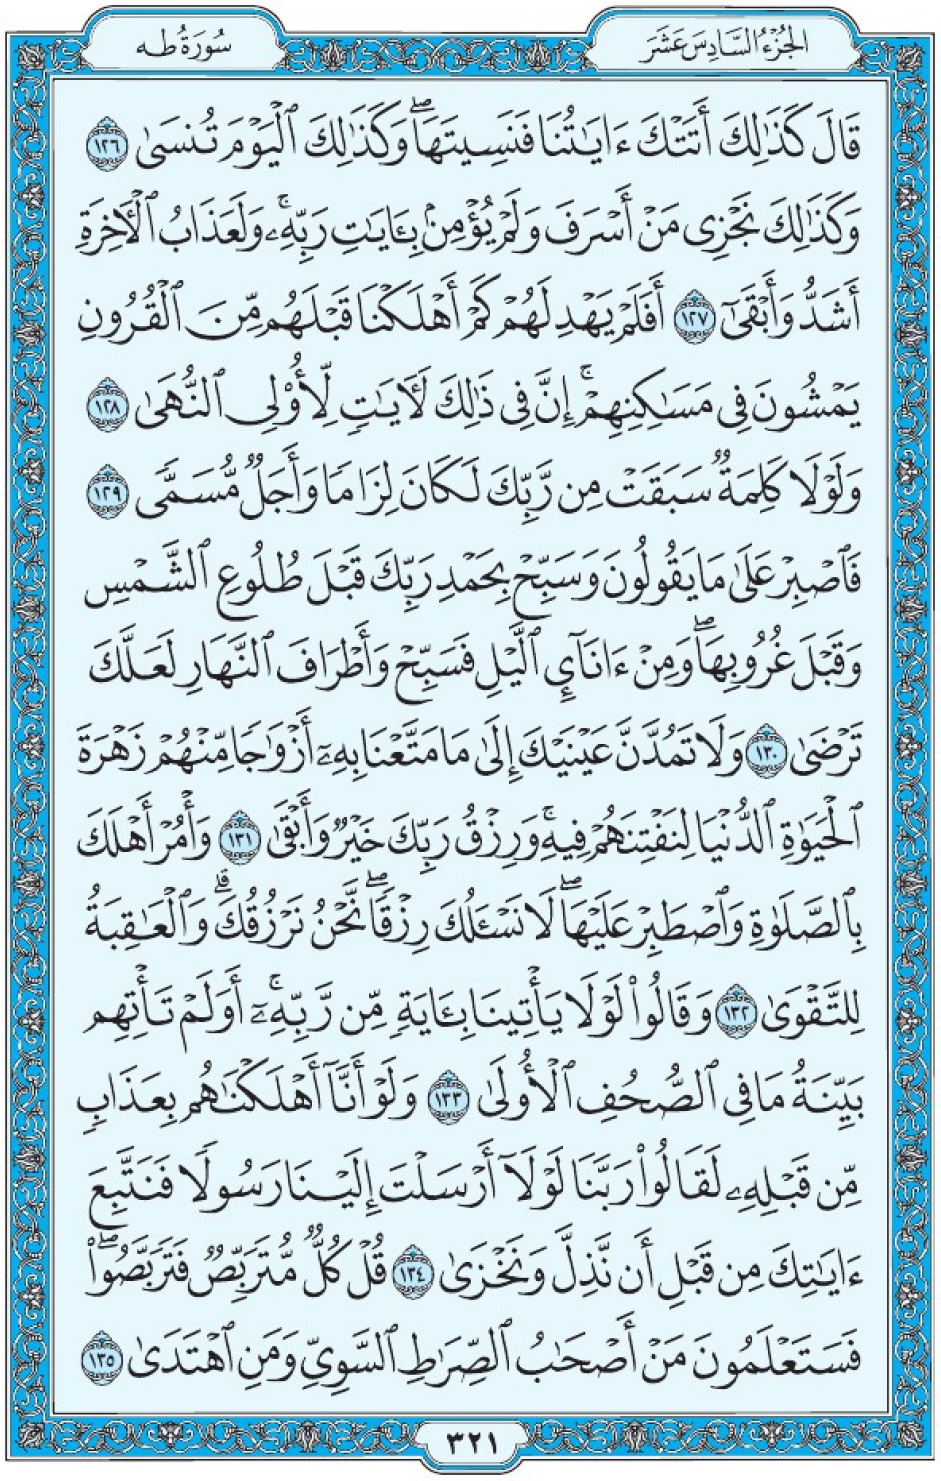 Коран Мединский мусхаф страница 321, Та Ха, аят 126-135